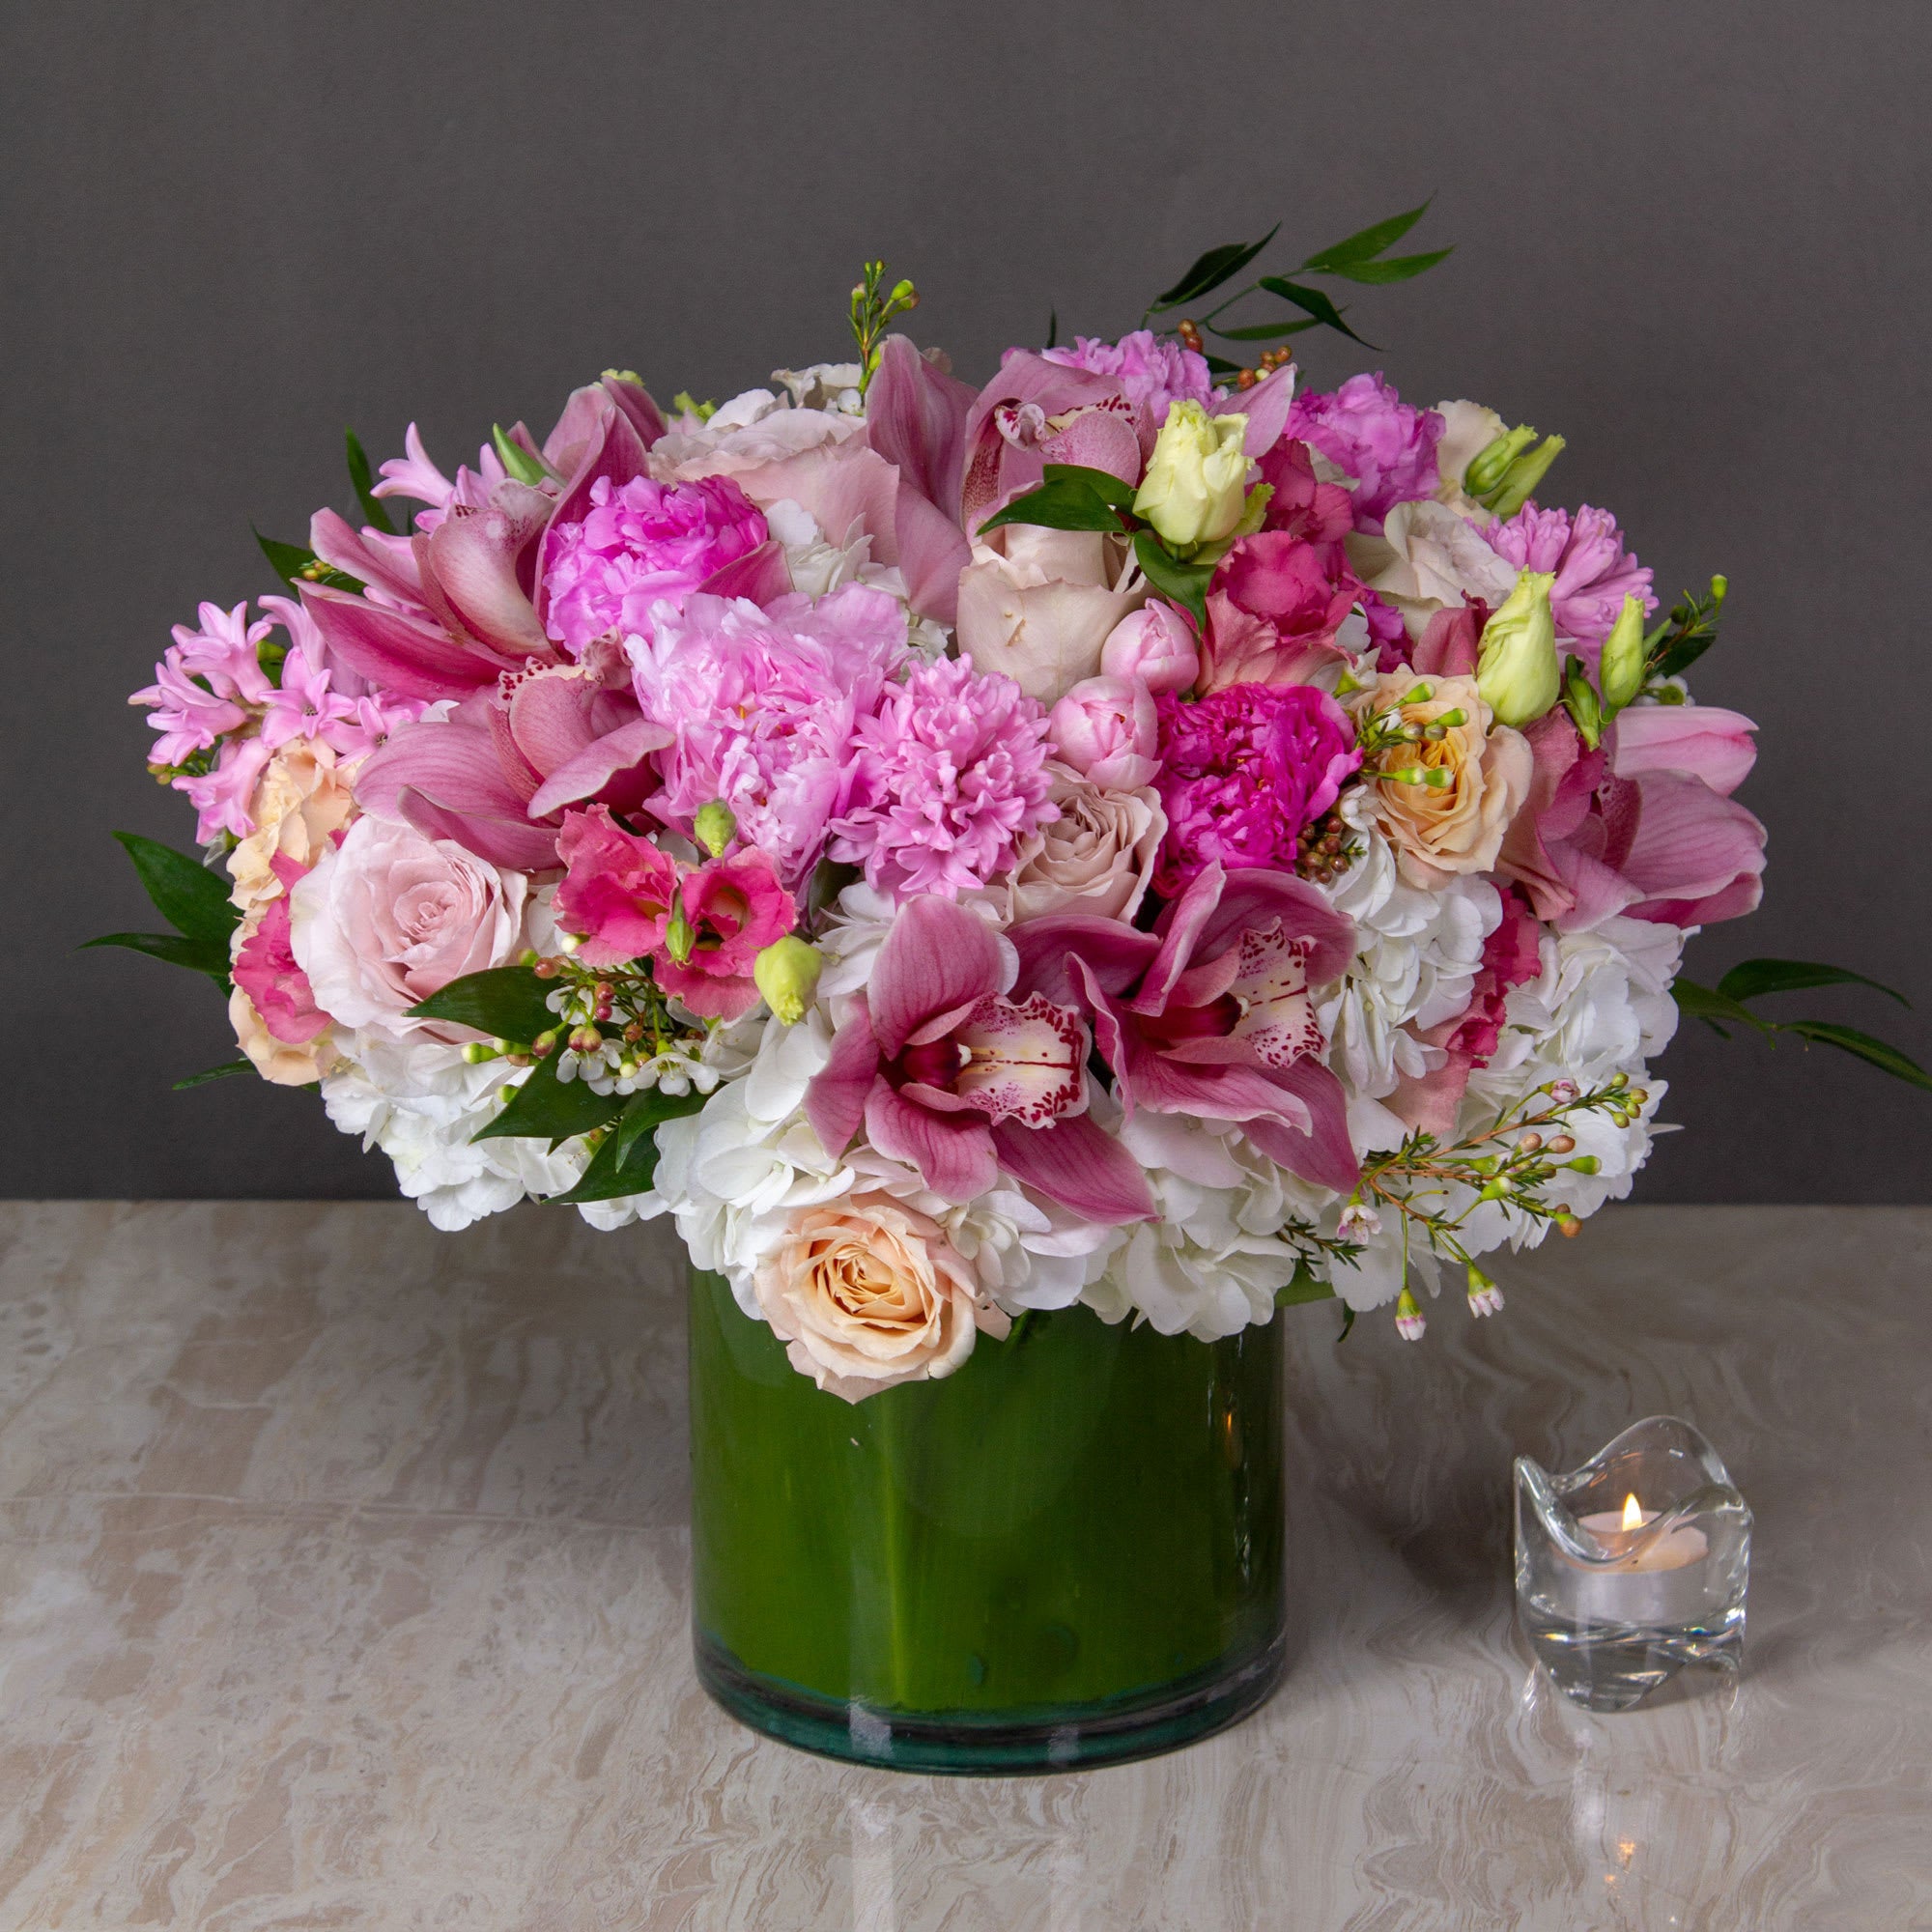 BIRTHDAY FLOWERS DESIGNER'S CHOICE Garrison Florist: Garrison Floral & Gifts  | Local Flower Delivery Garrison, KY, 41141